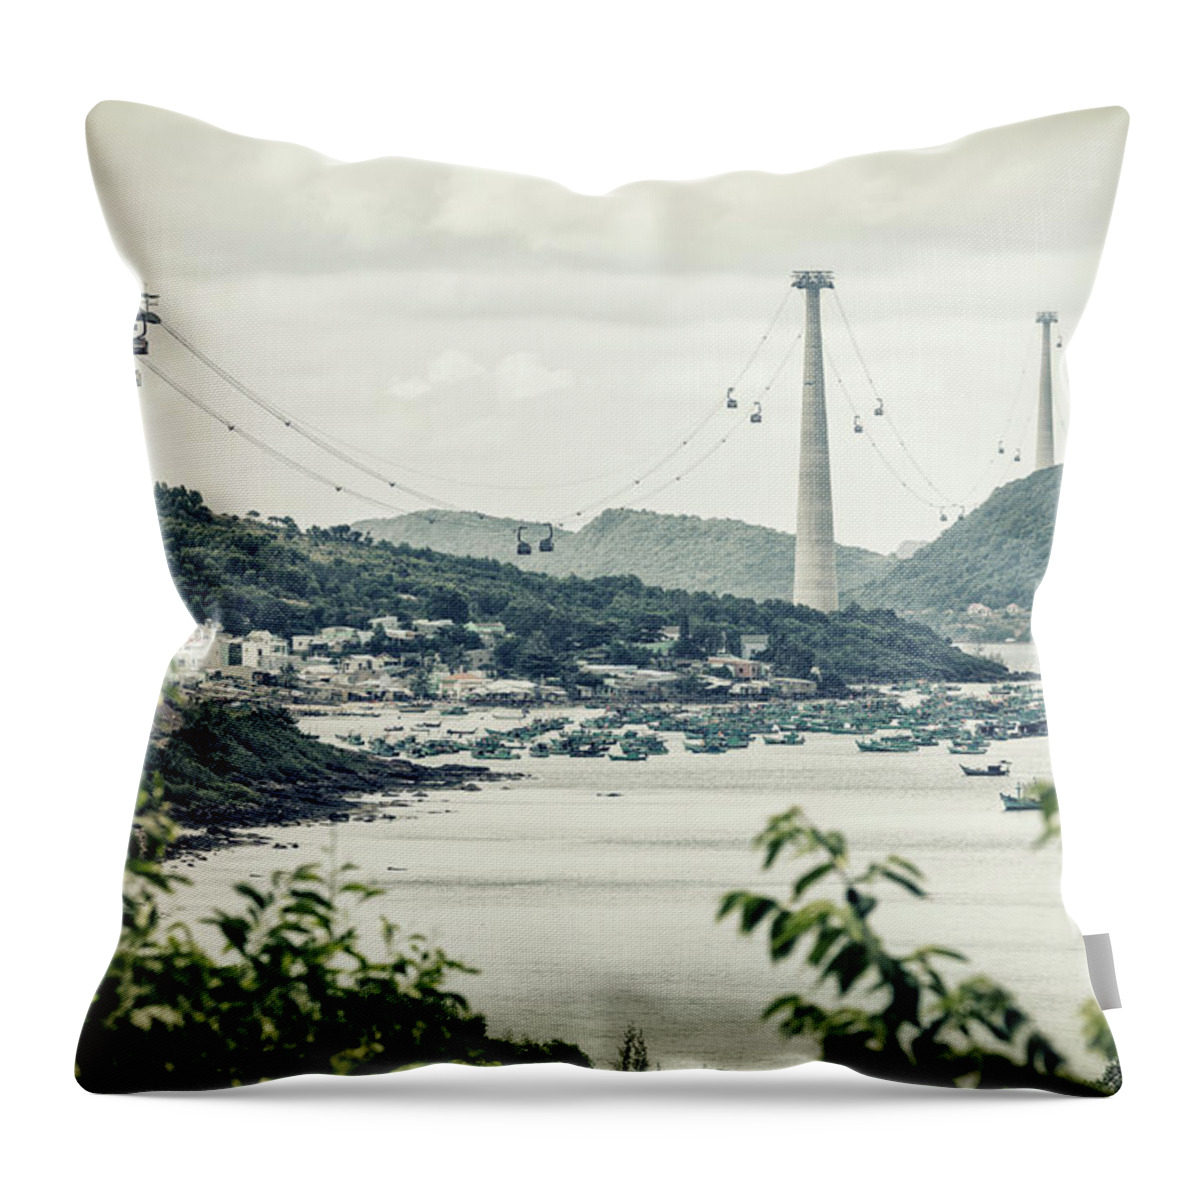 Estock Throw Pillow featuring the digital art Cableway, Vietnam by Massimo Ripani